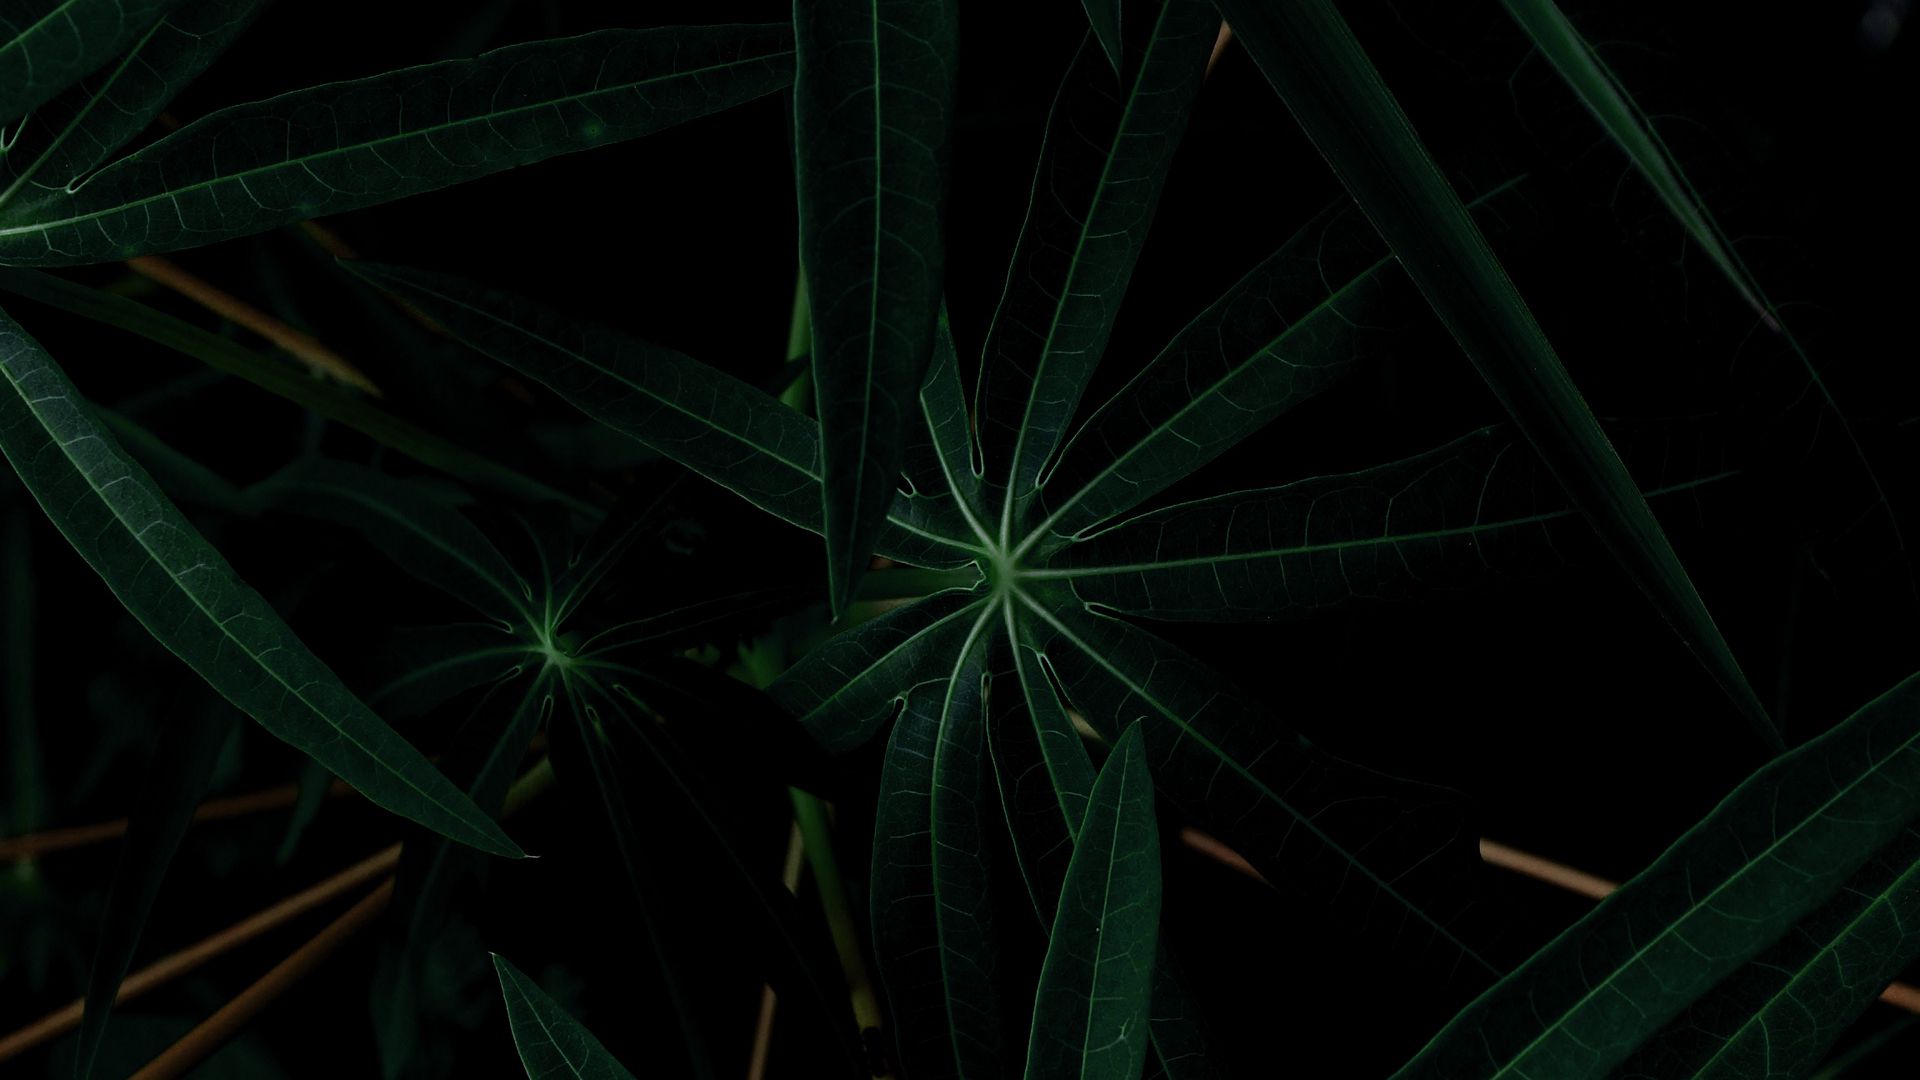 500 Free Dark Green Leaves  Green Images  Pixabay